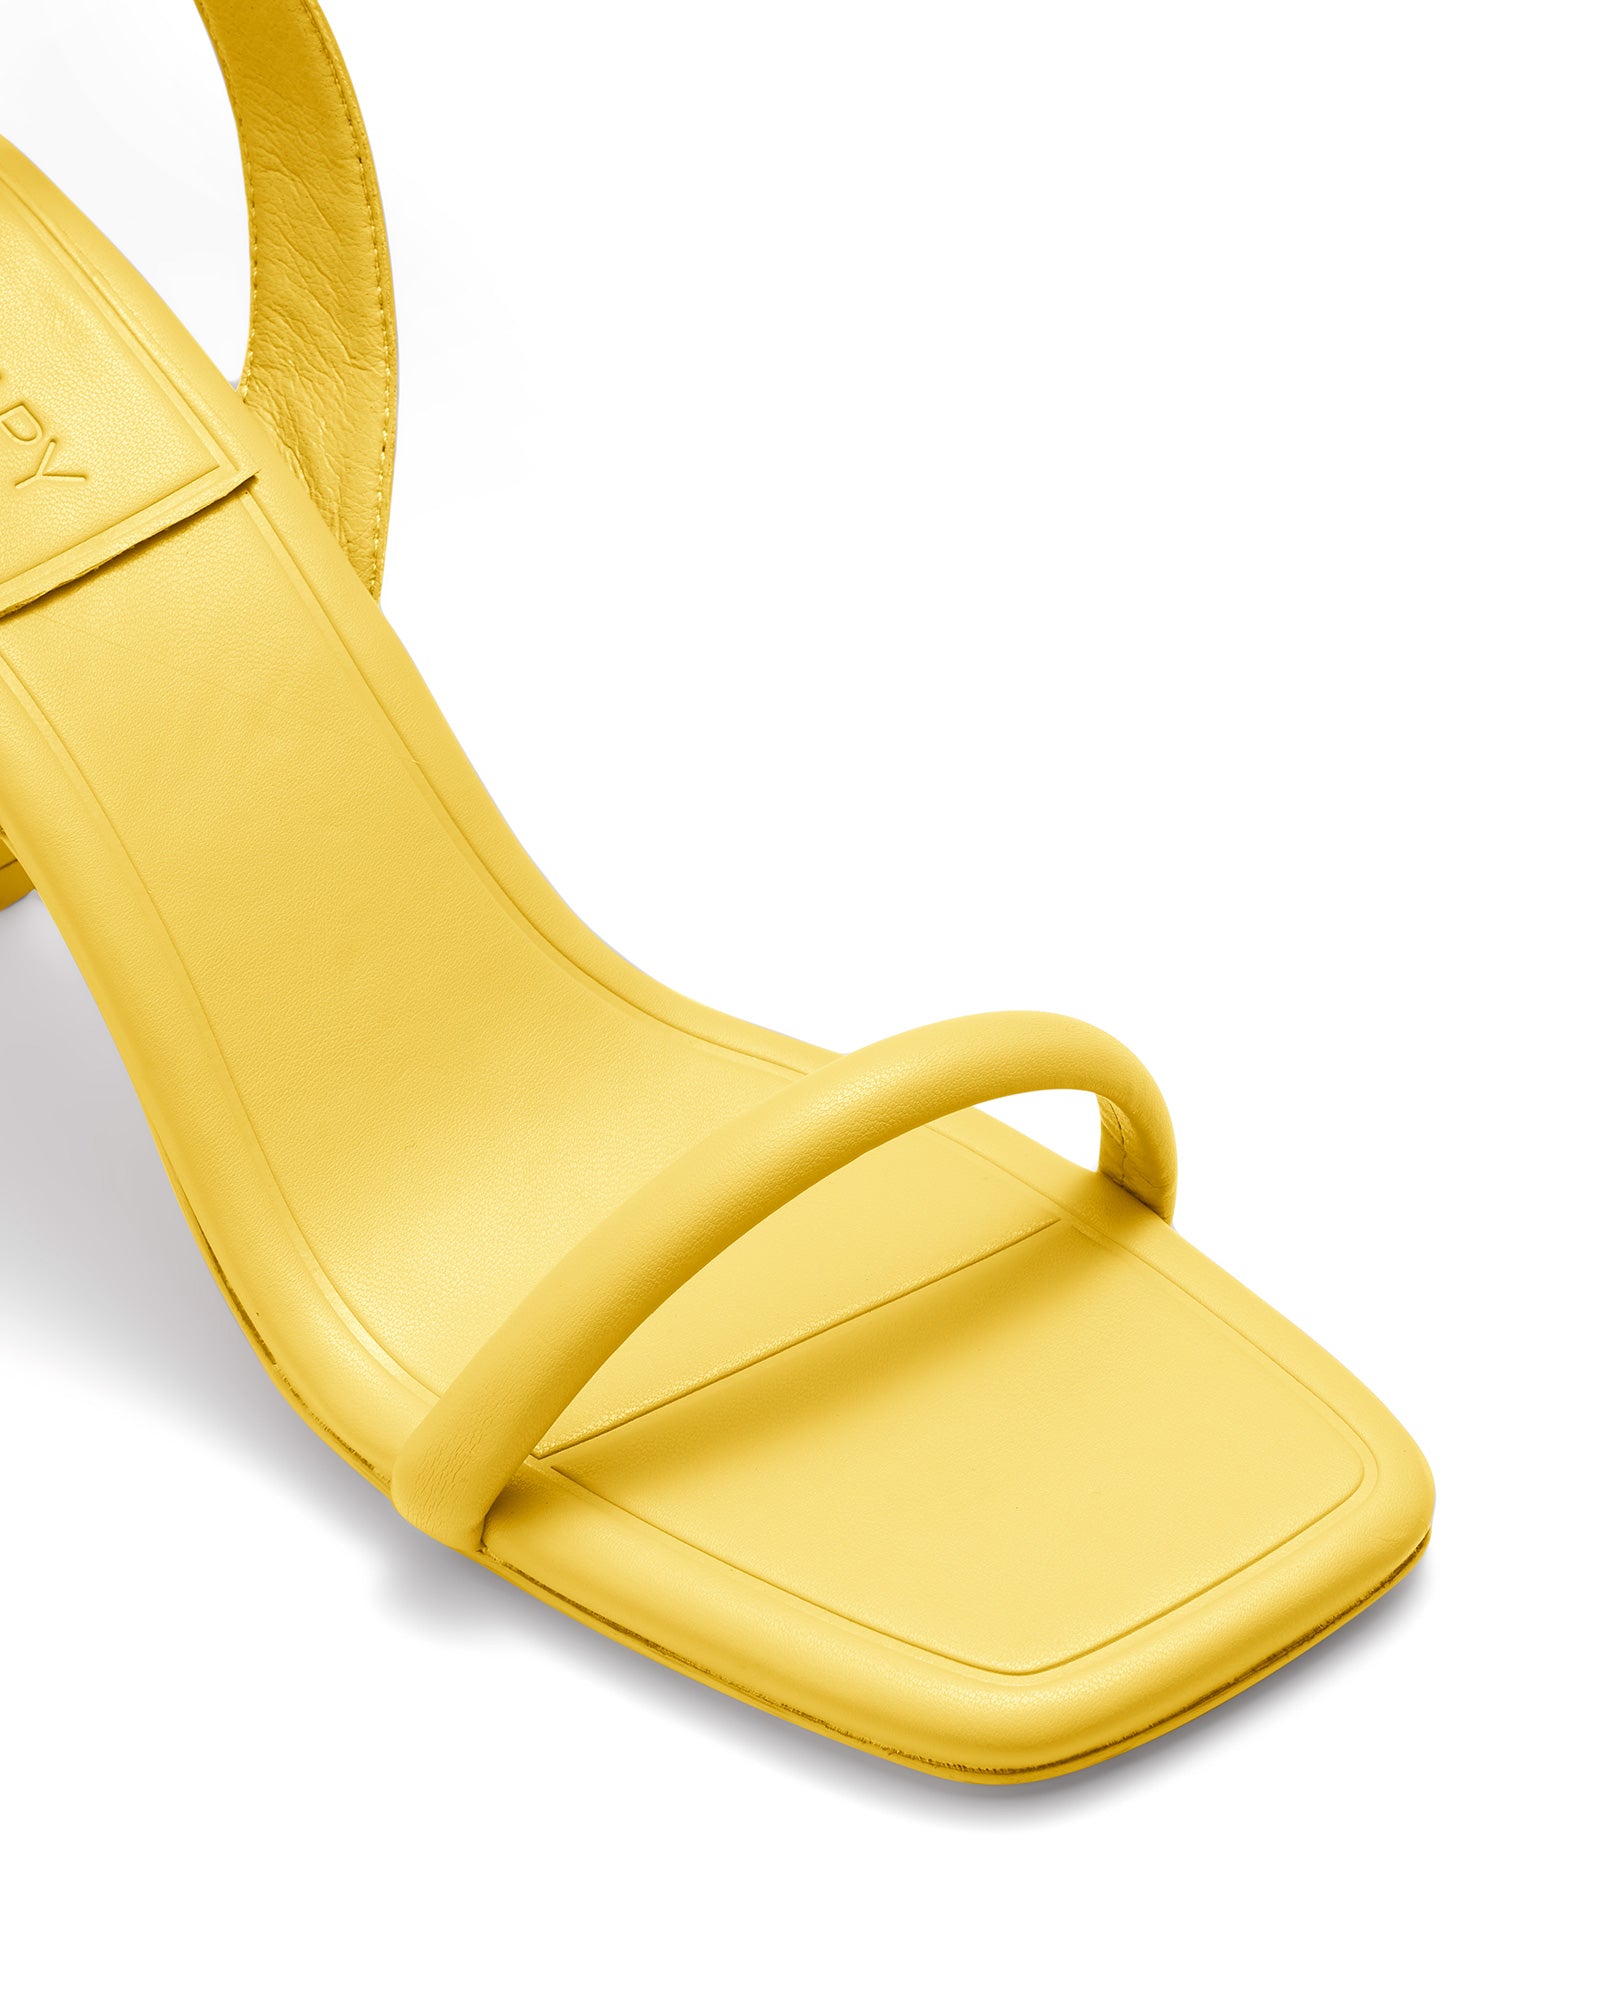 Therapy Shoes Desire Lemon | Women's Heels | Sandals | Stiletto | Strappy